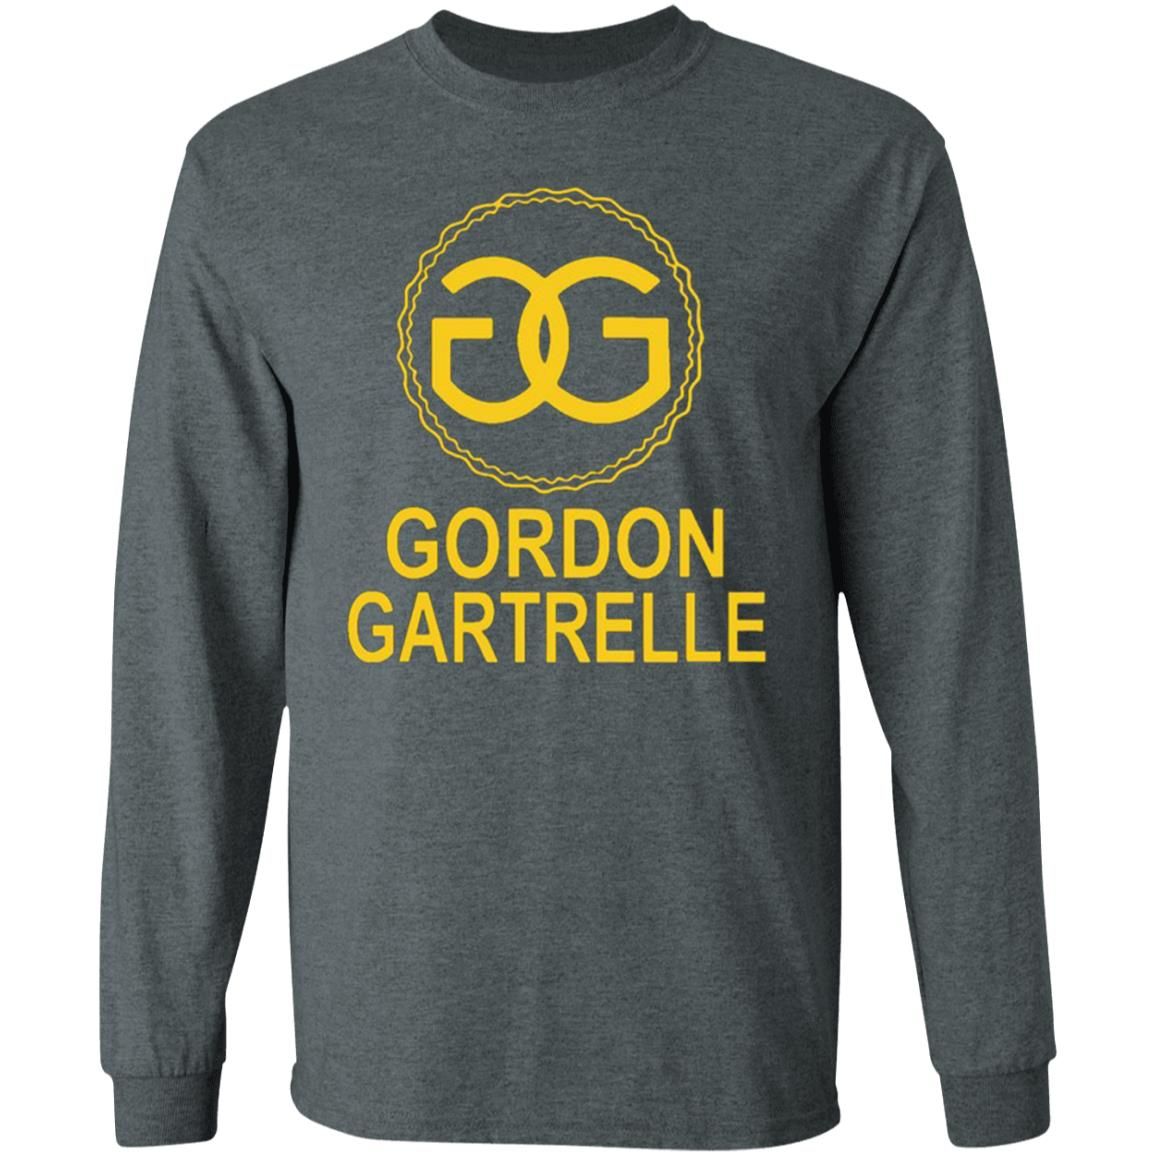 The Goozler Gordon Gartrelle Style: G240 LS Ultra Cotton T-Shirt, Color: Dark Heather